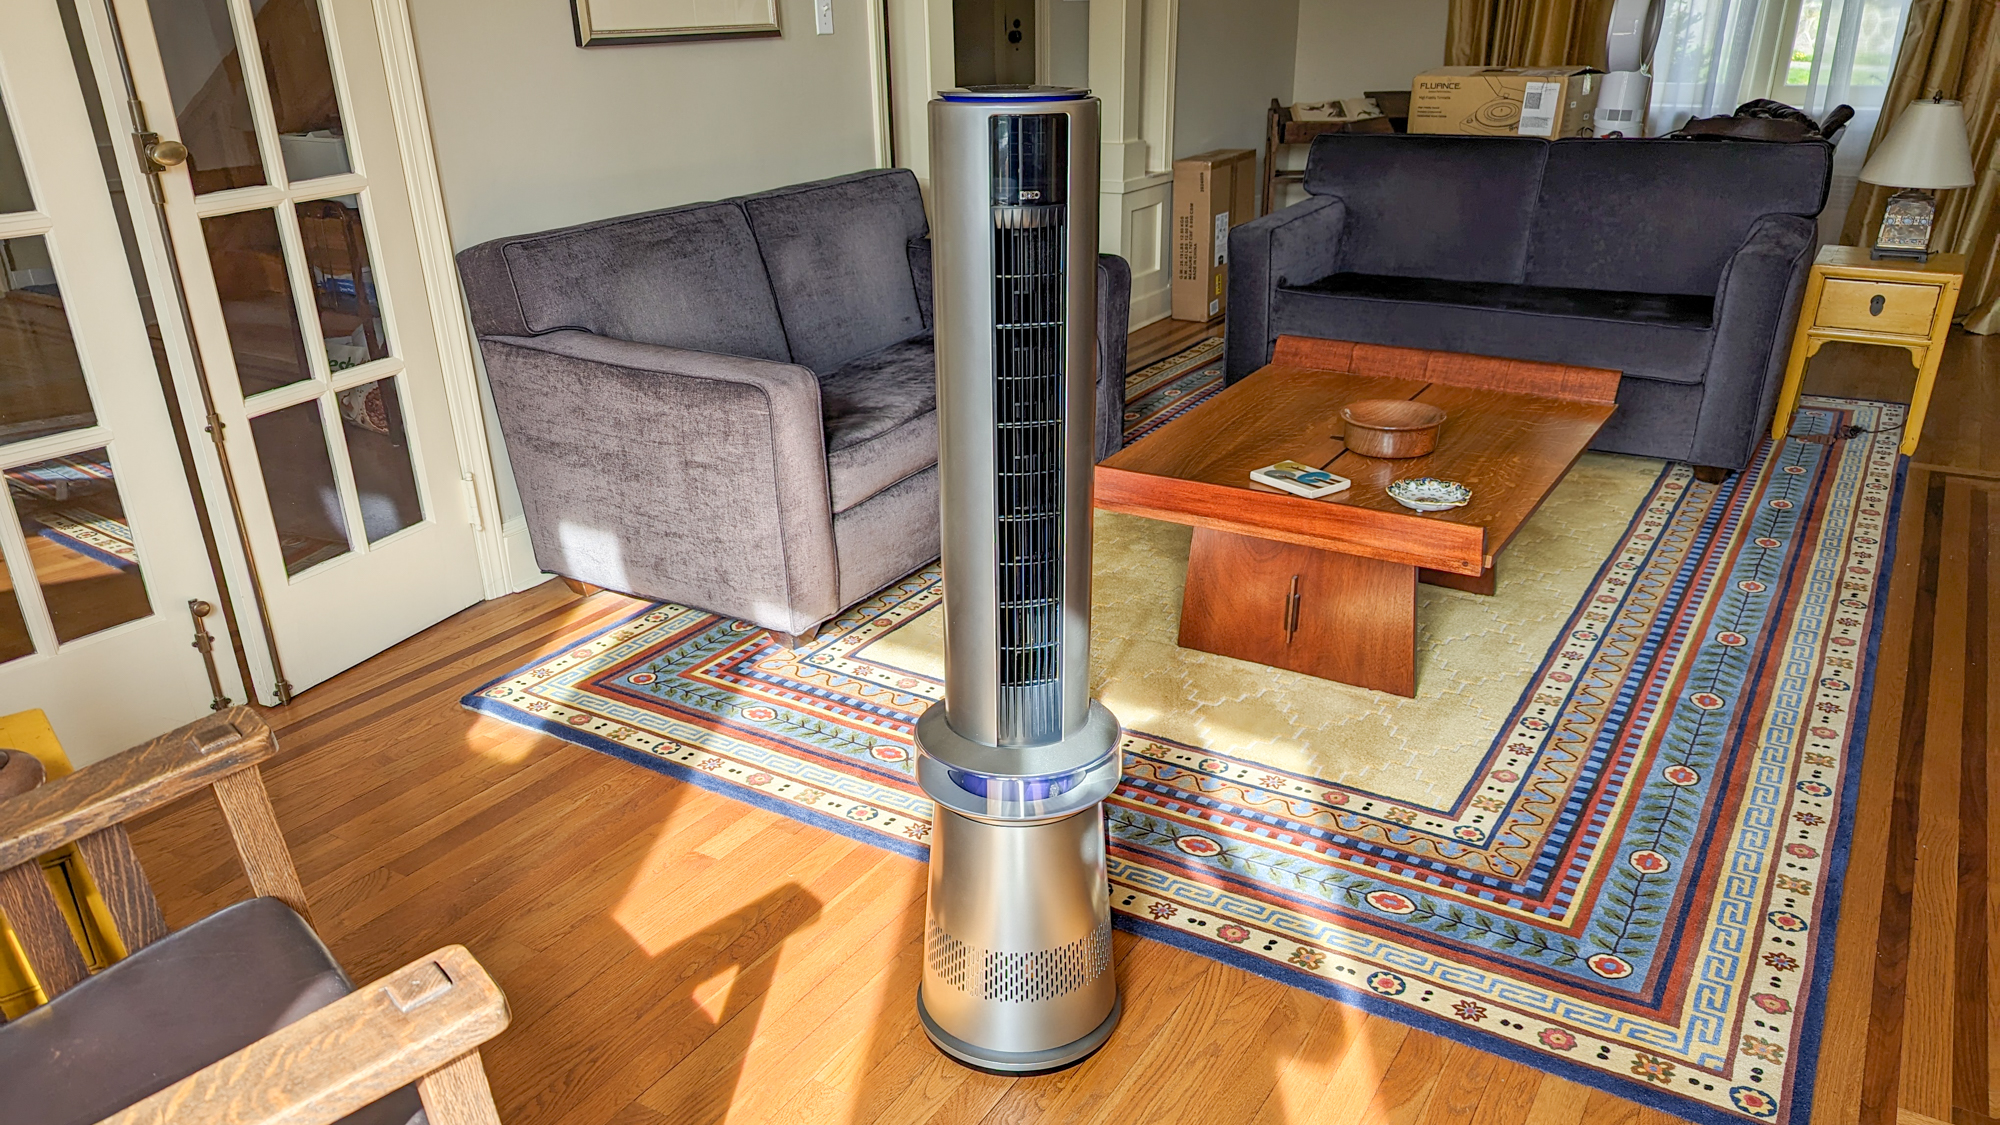 Dreo MC710S air purifier in living room